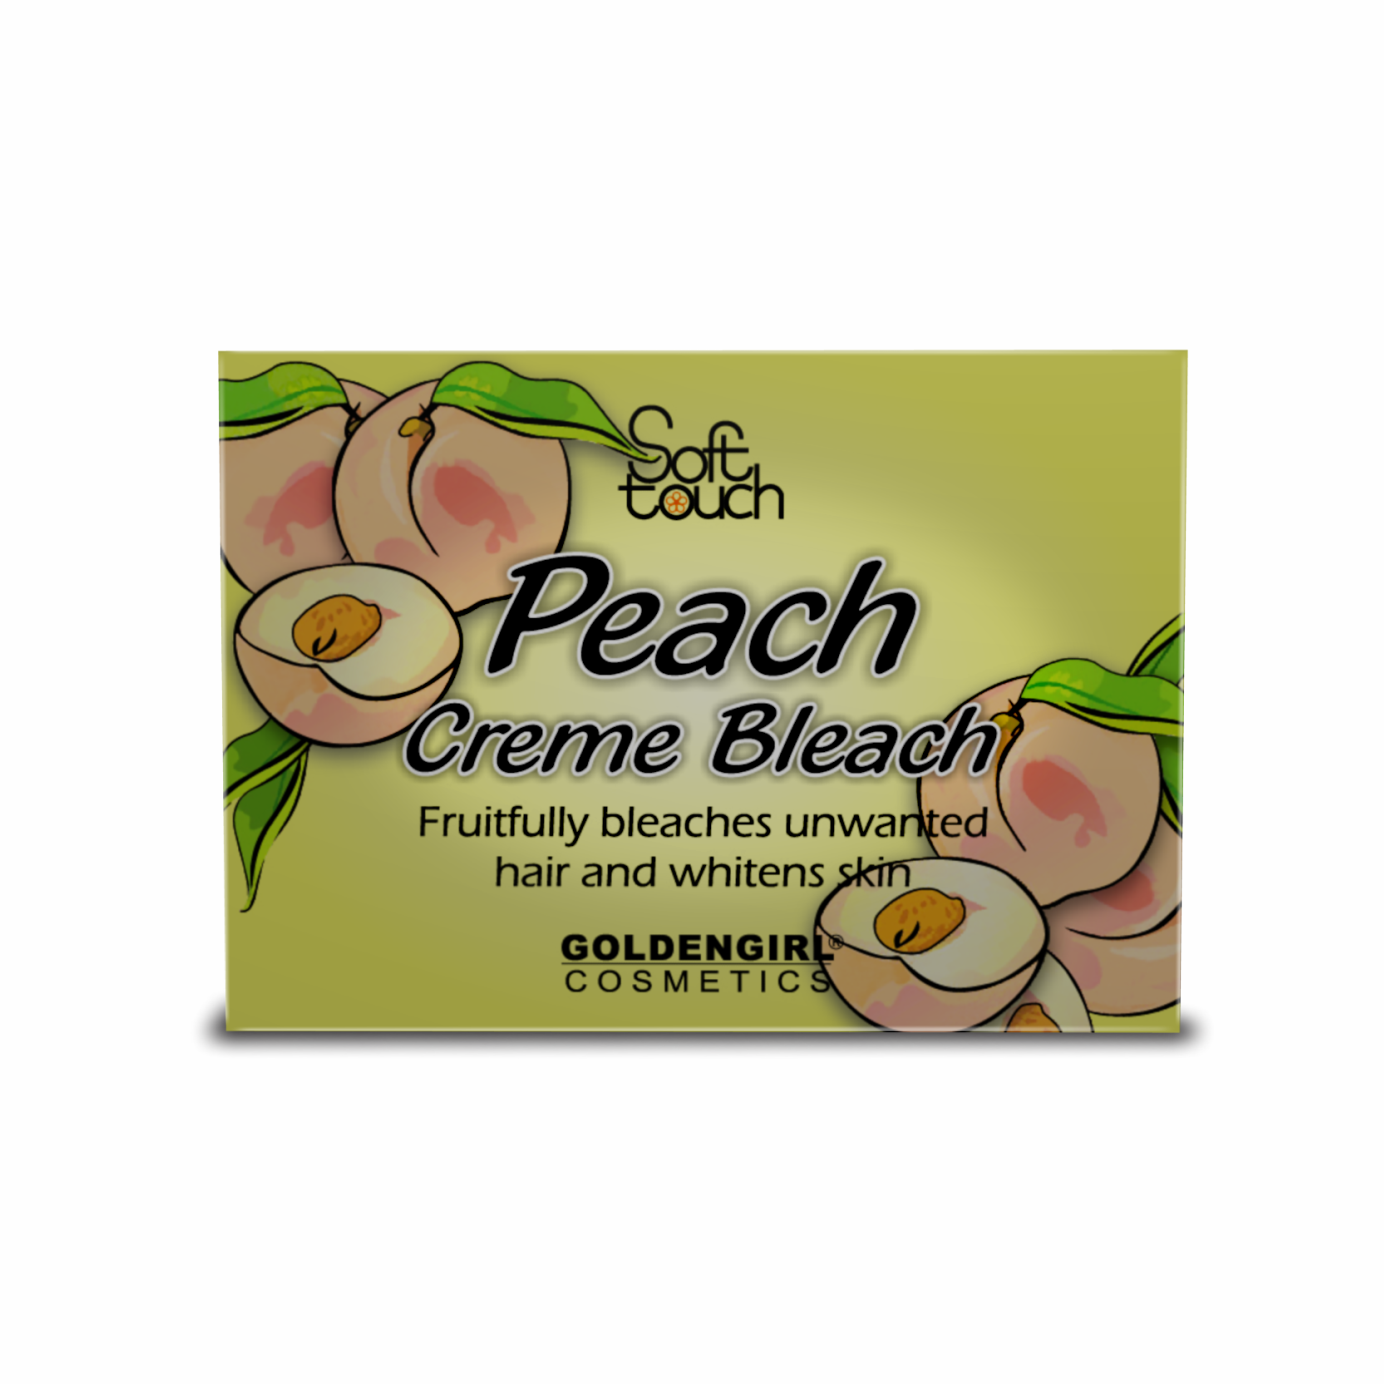 Peach Bleach Creme Trial Pack 24 gm - Golden Girl Cosmetics